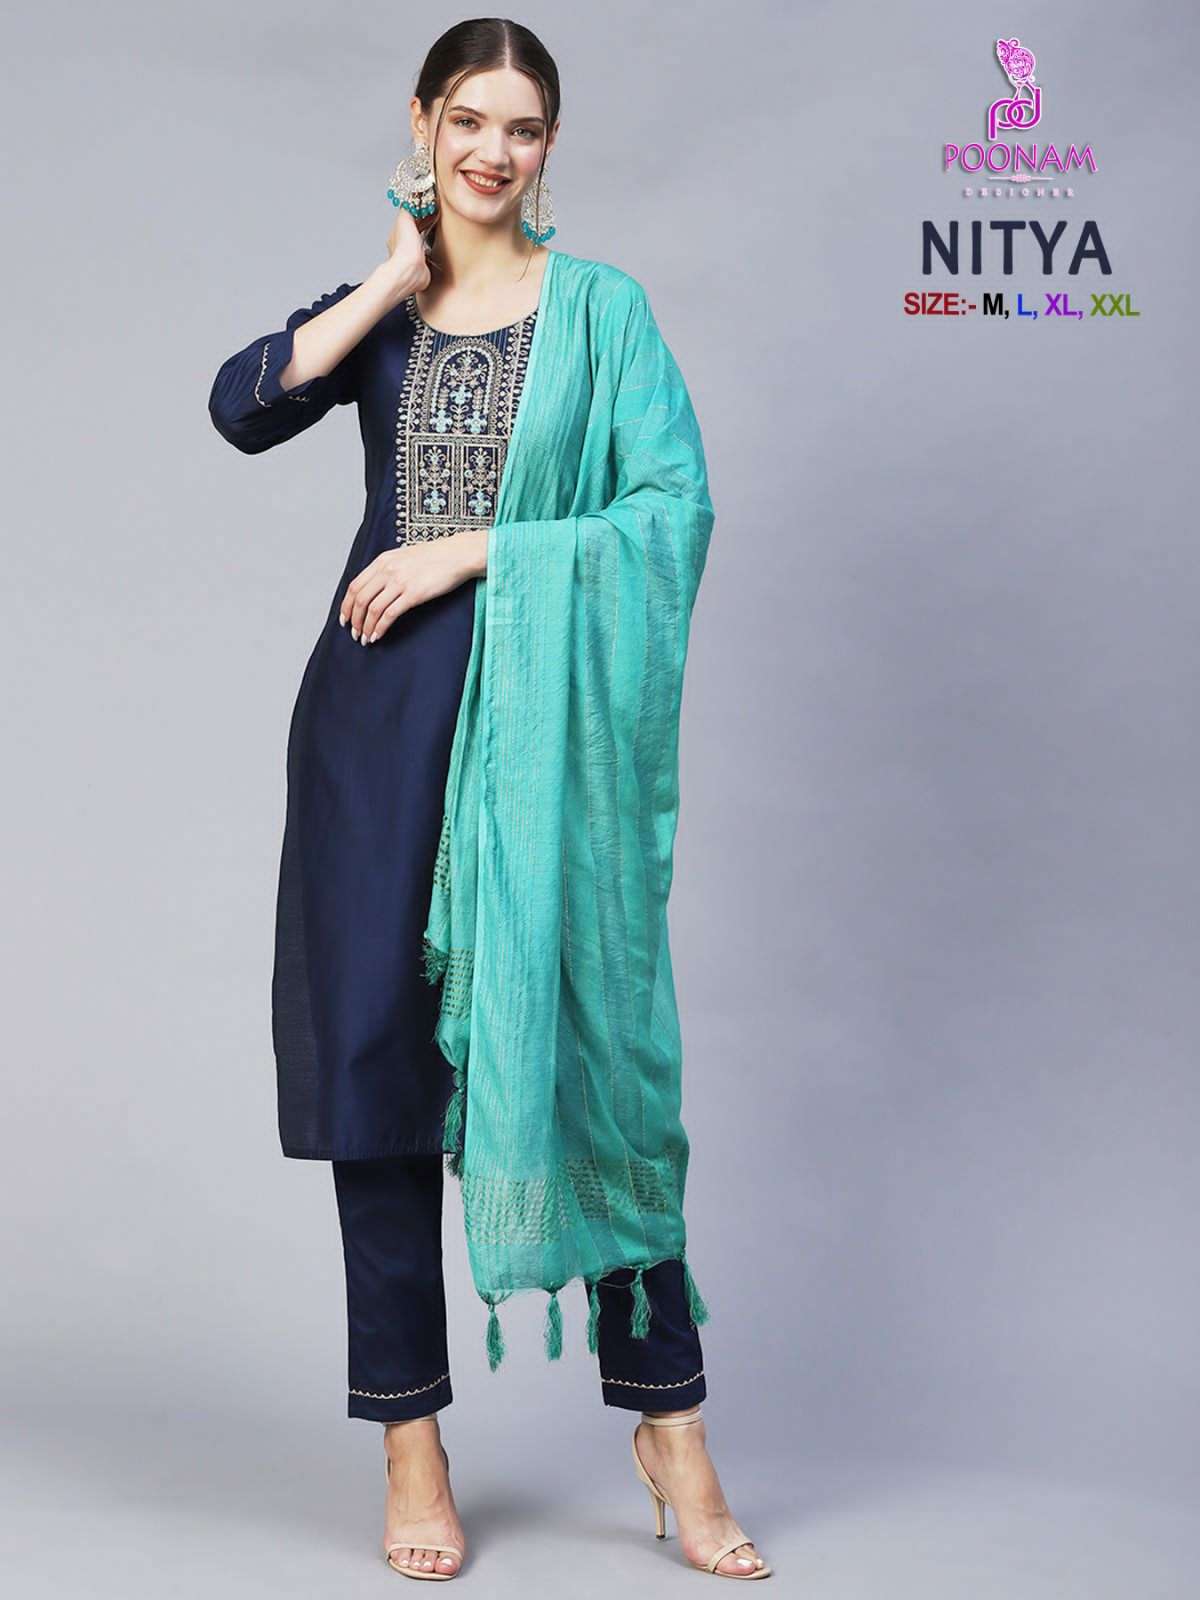 Poonam Designer Nitya Rayon with fancy Neck Work designer re...